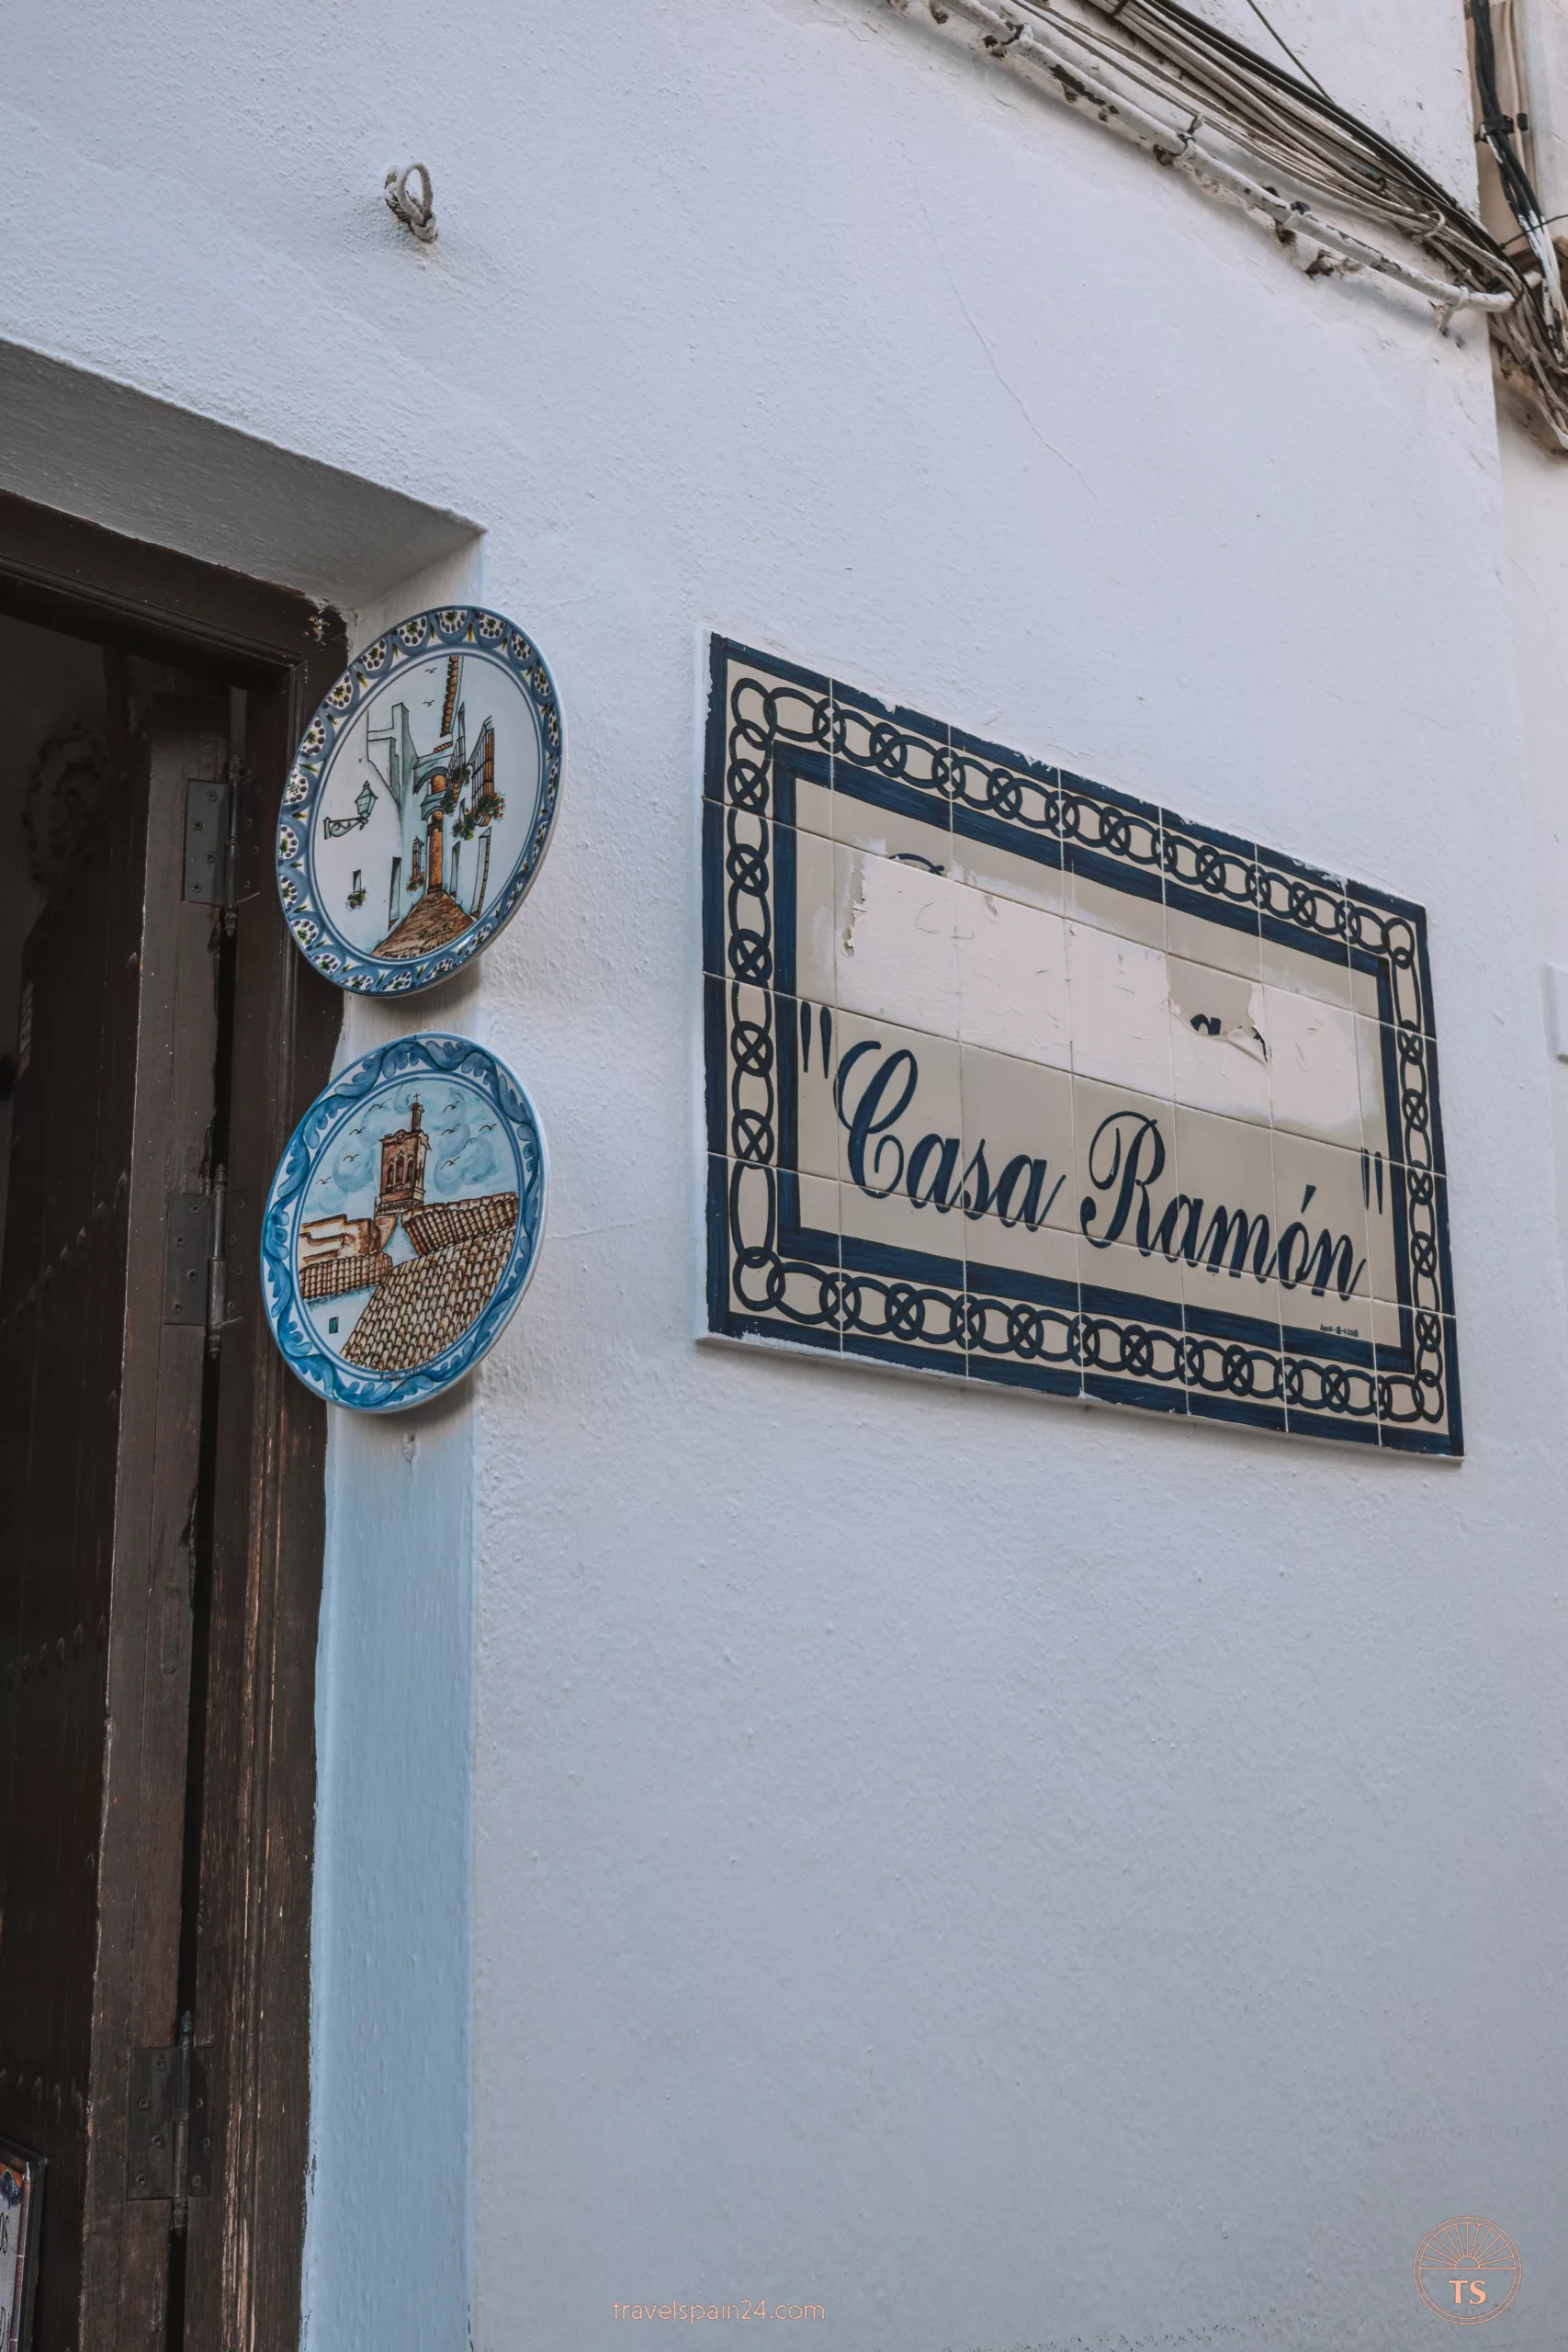 Casa Ramón in Arcos de la Frontera, a shop offering unique souvenirs like colorful ceramics and pottery.